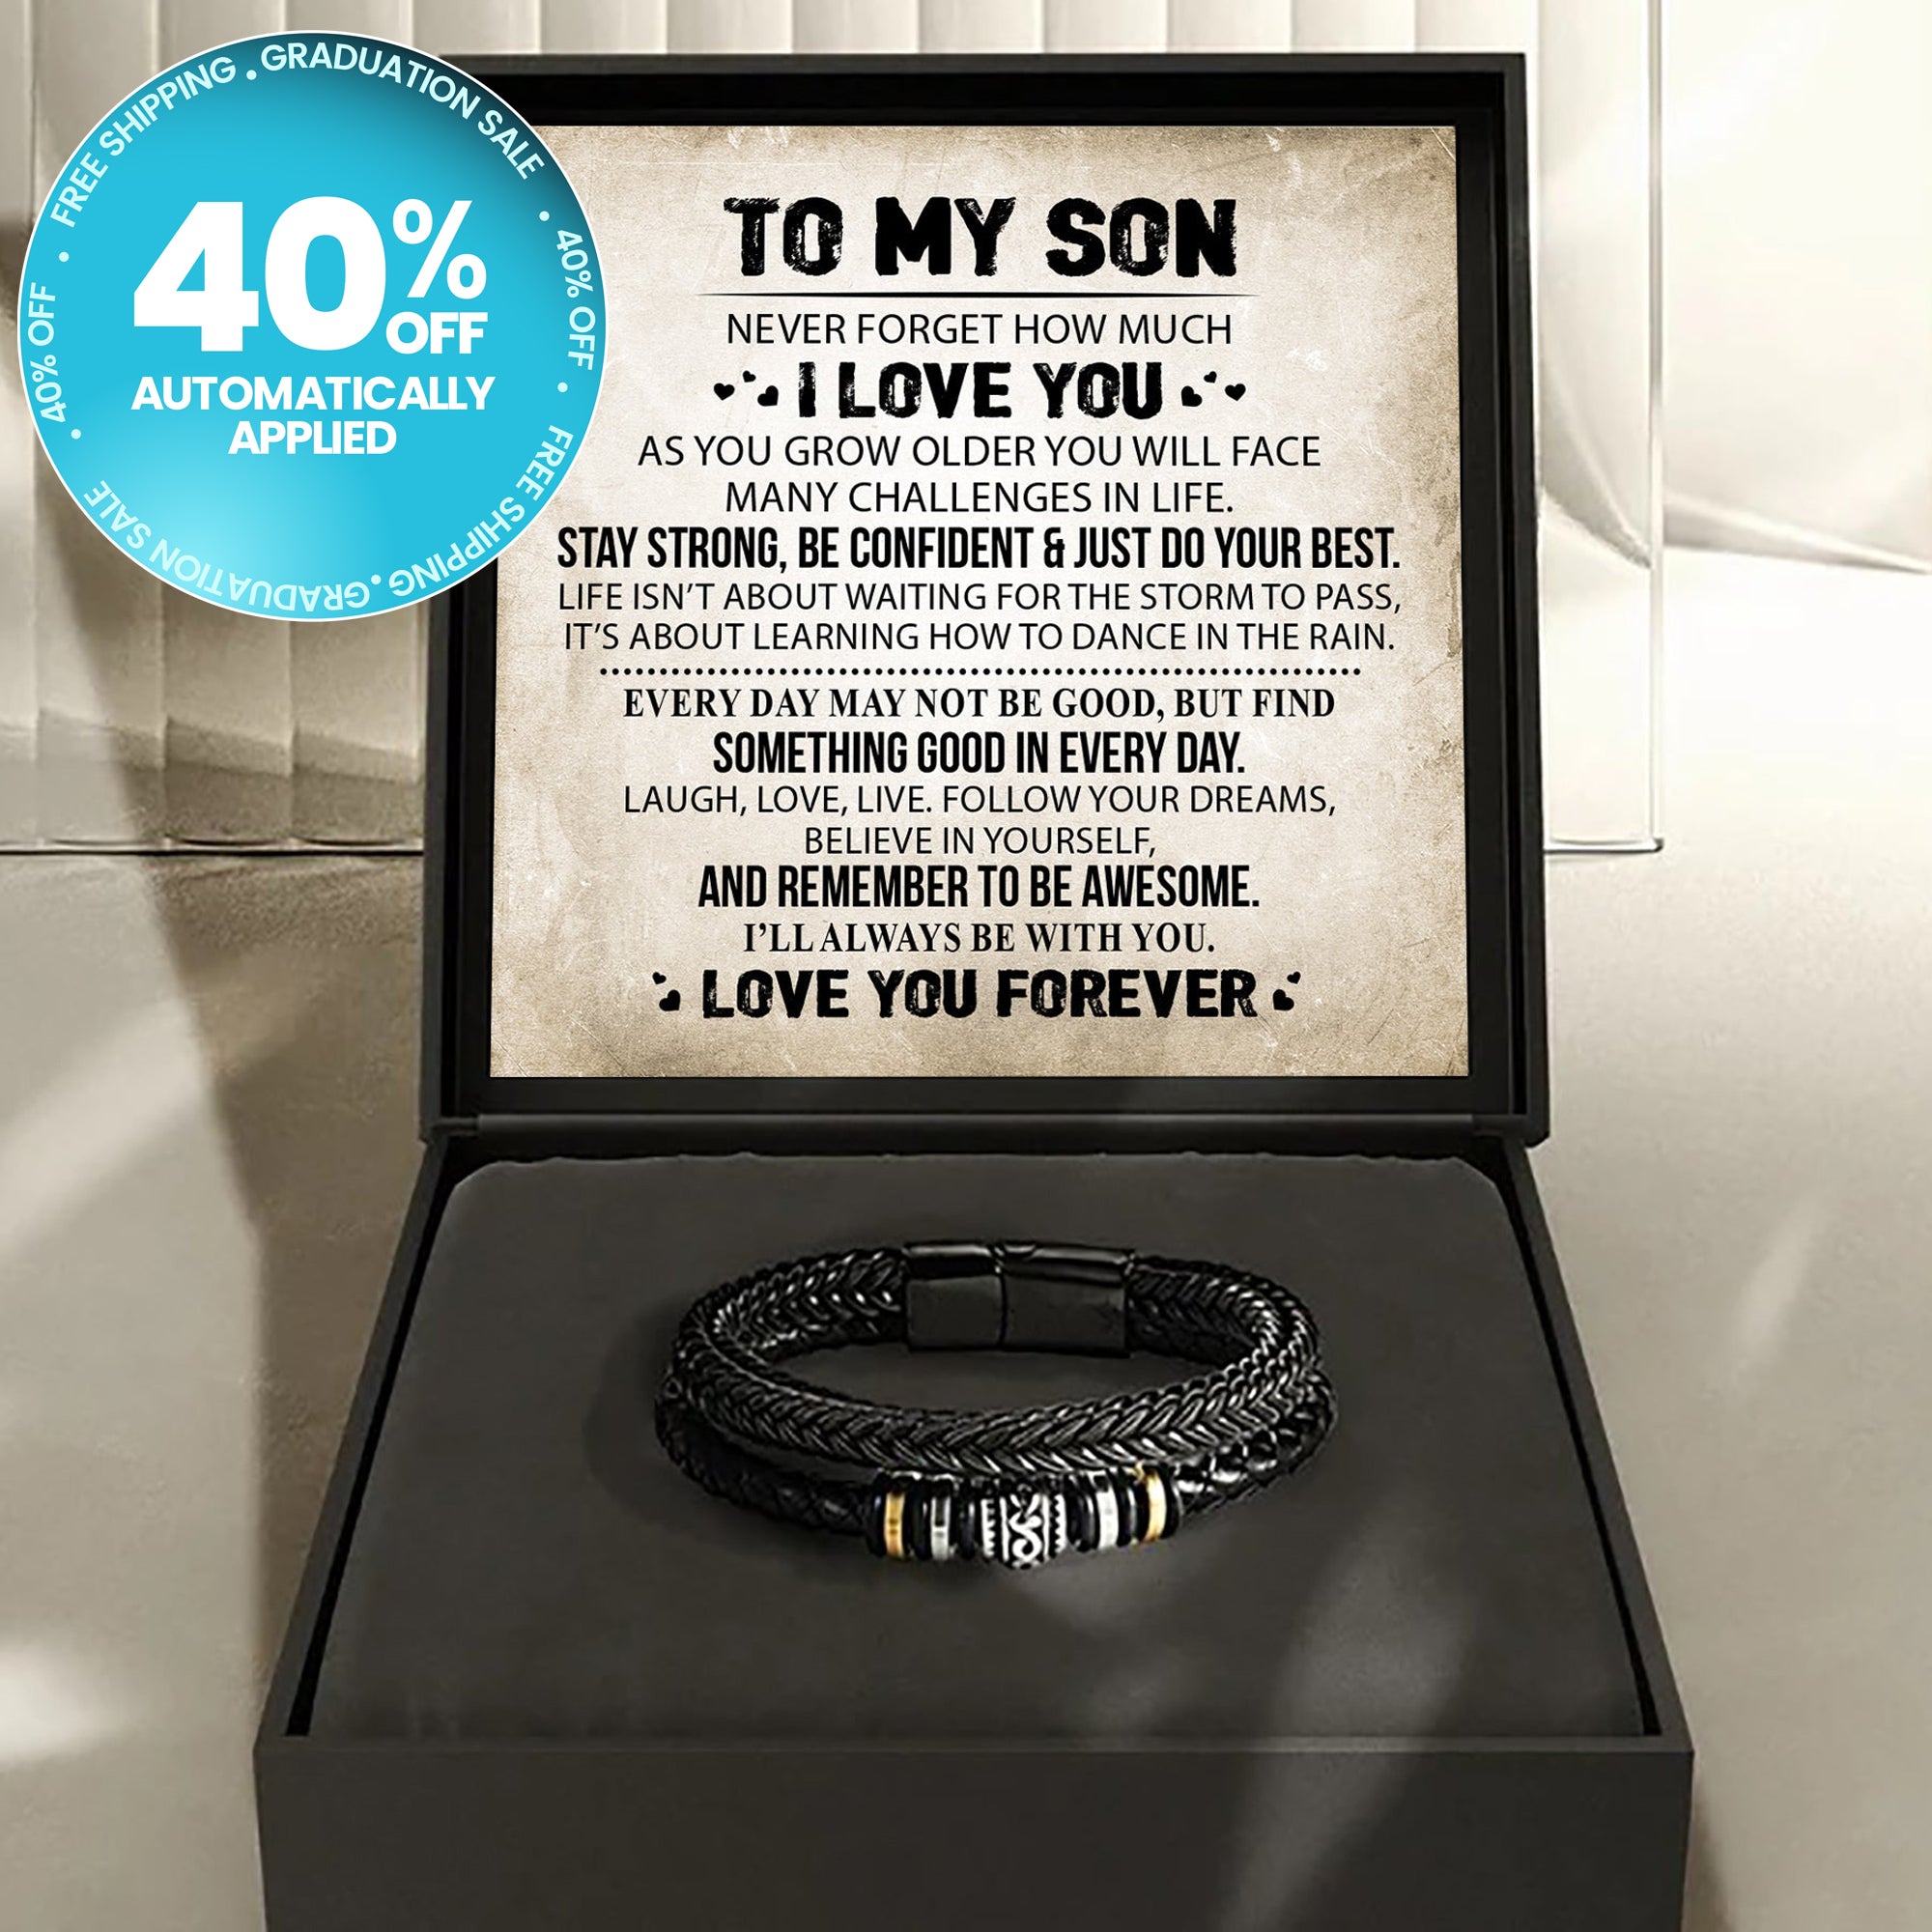 To My Son - "I Love You, Forever" Bracelet Gift Set